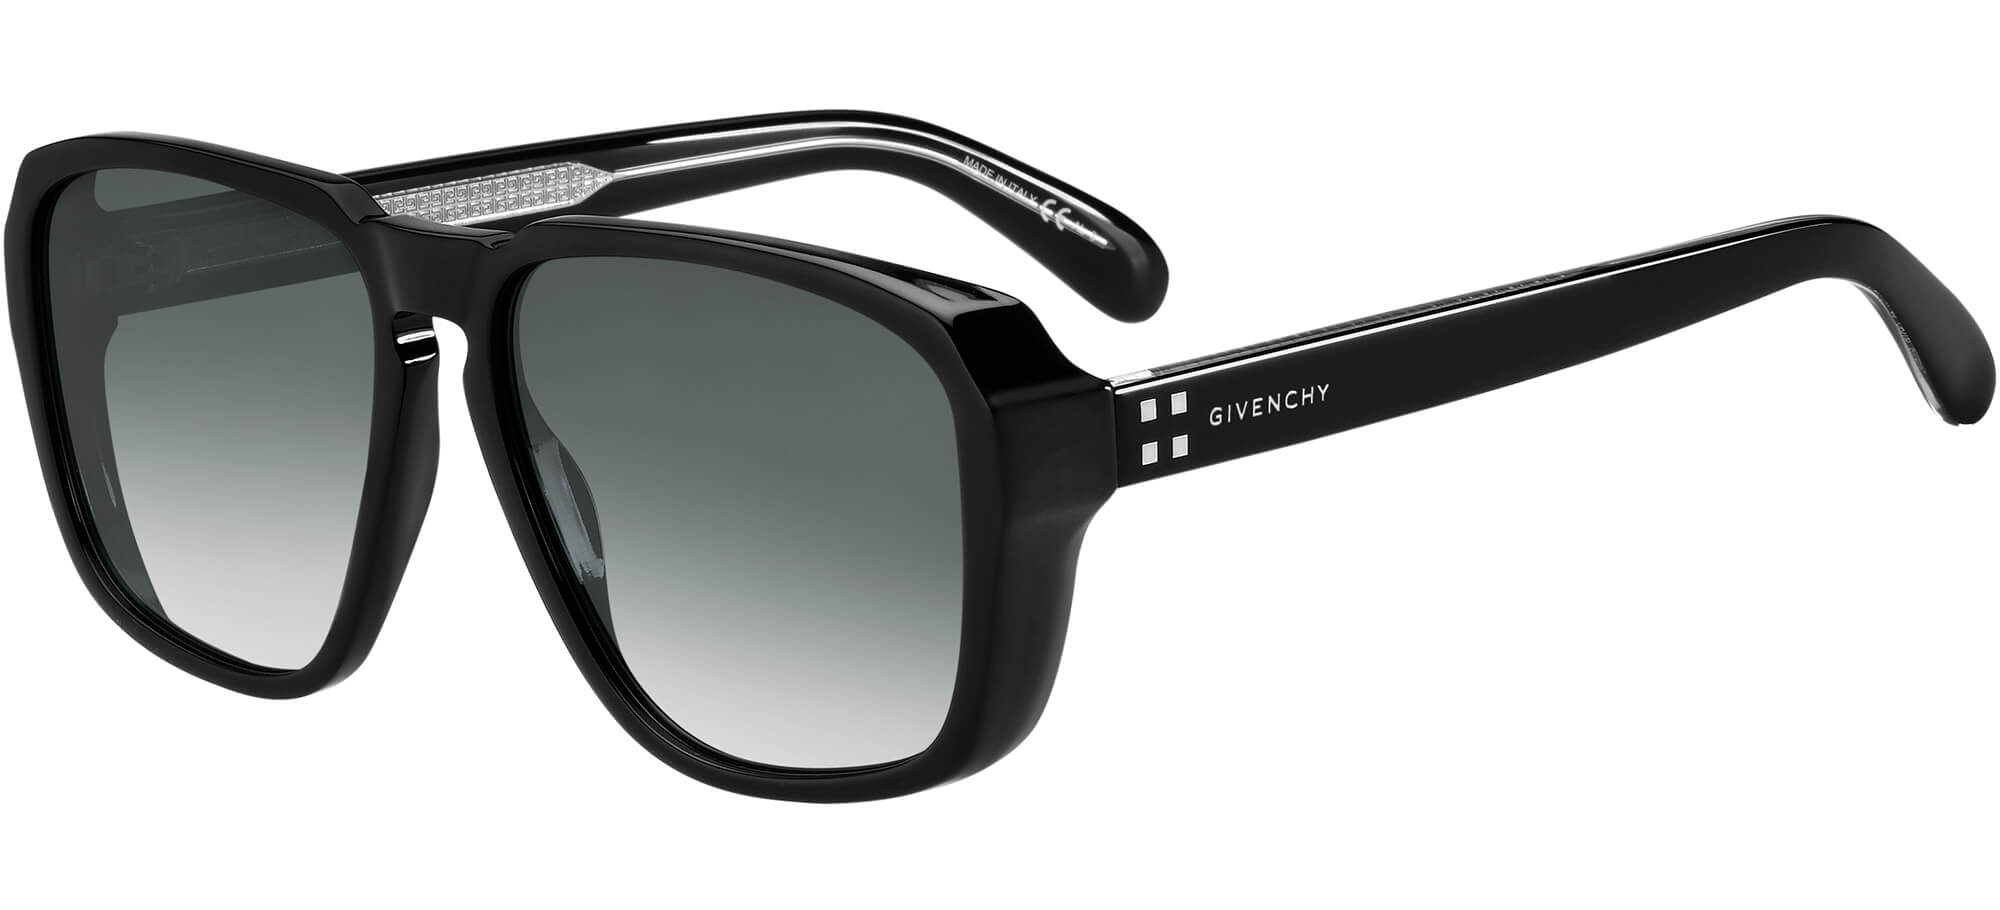 Givenchy4G SQUARE GV 7121/SBlack/grey Shaded (807/9O)